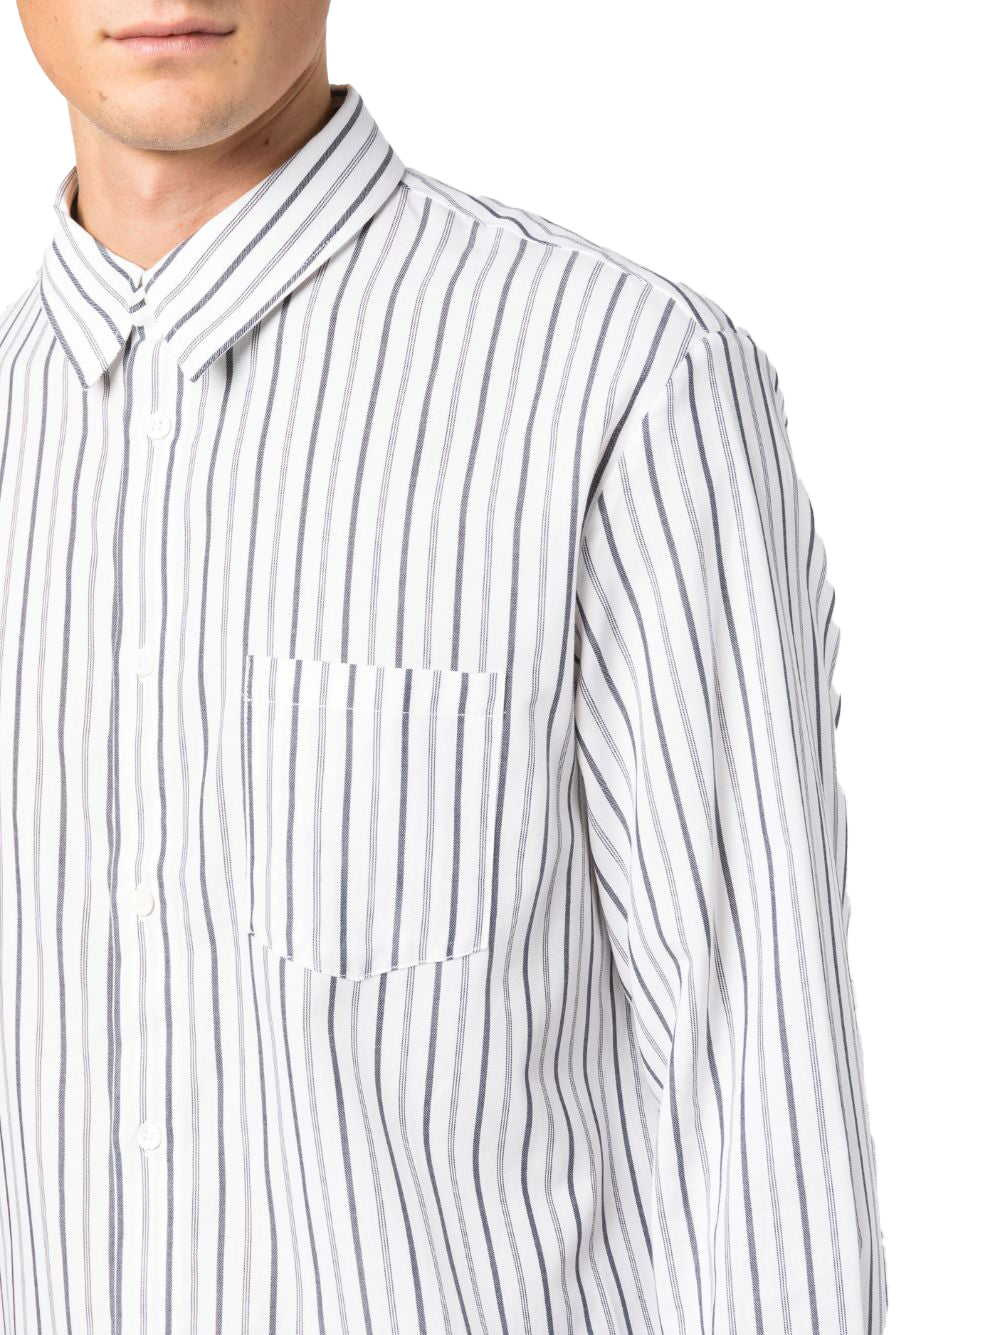 Clement Striped Shirt